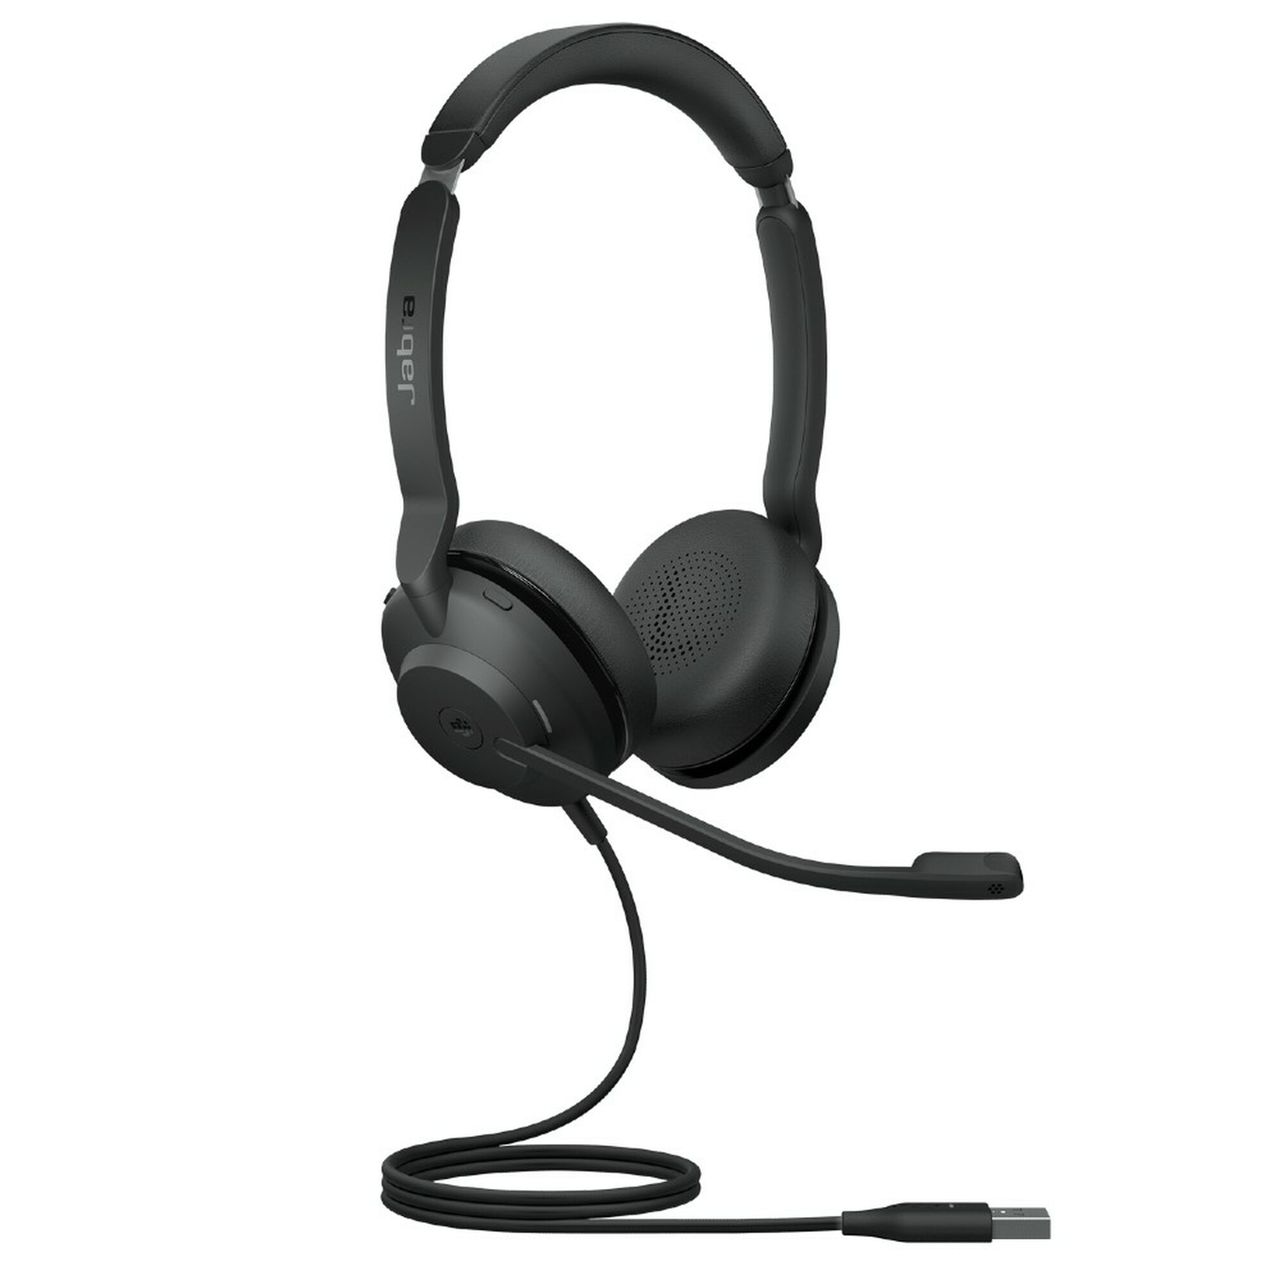 [PRE-ORDER] Jabra Evolve II 3MS Stereo Headset with Build in Microphone , Usb -C (ETA : 2022-03-30)